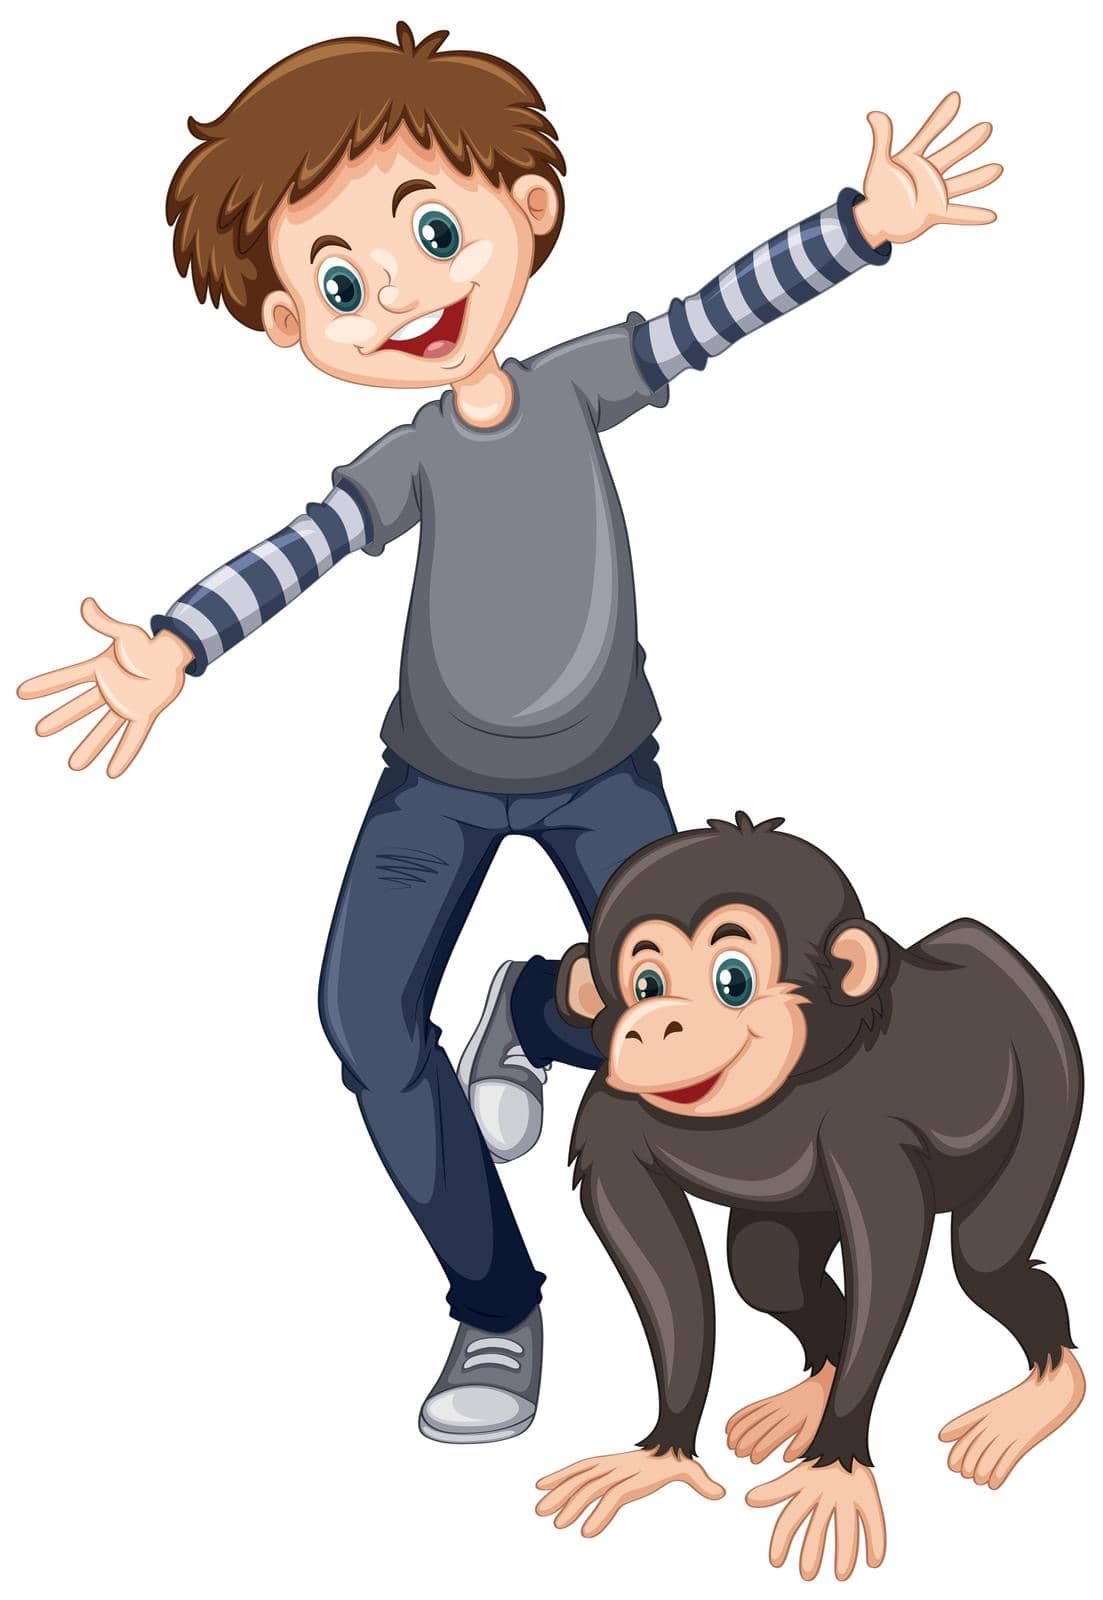 Little boy with cute chimpanzee illustration